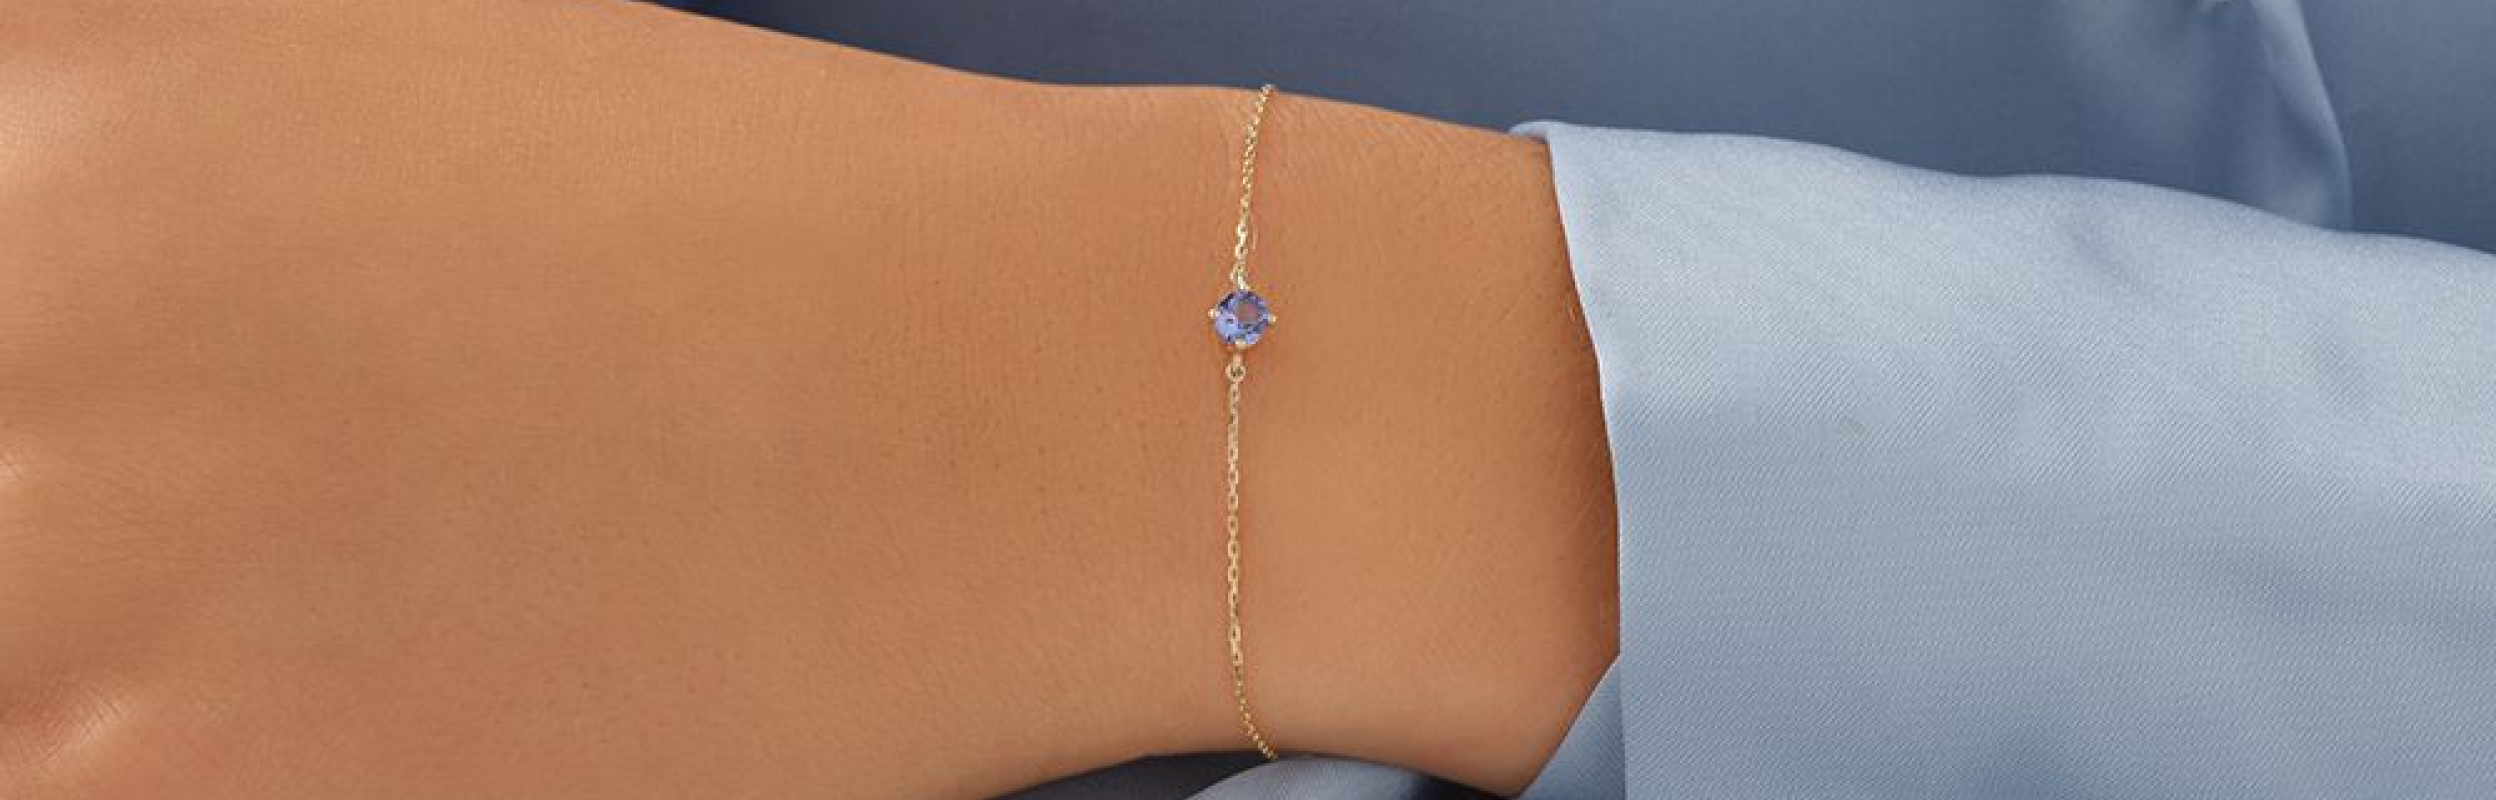 blue stone bracelet on womans wrist